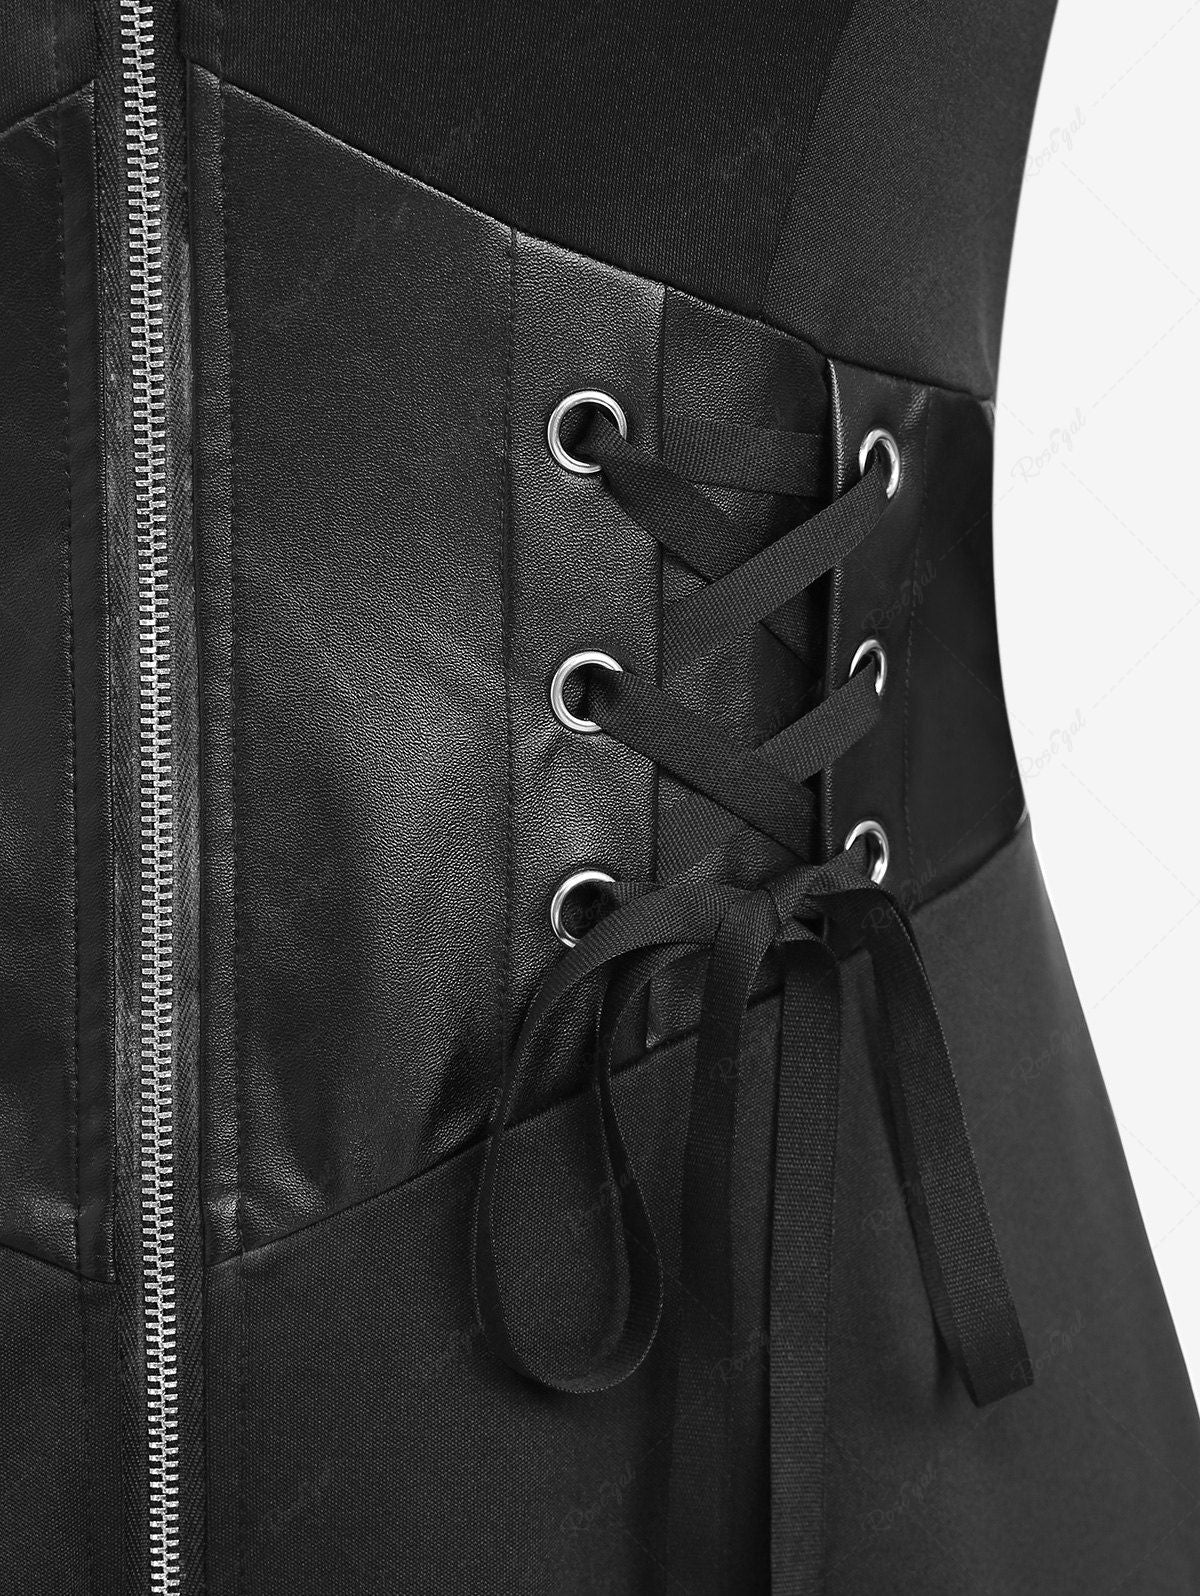 1x Gothic Dark Lace Up Female Waist Corset Belt Wide PU Leather